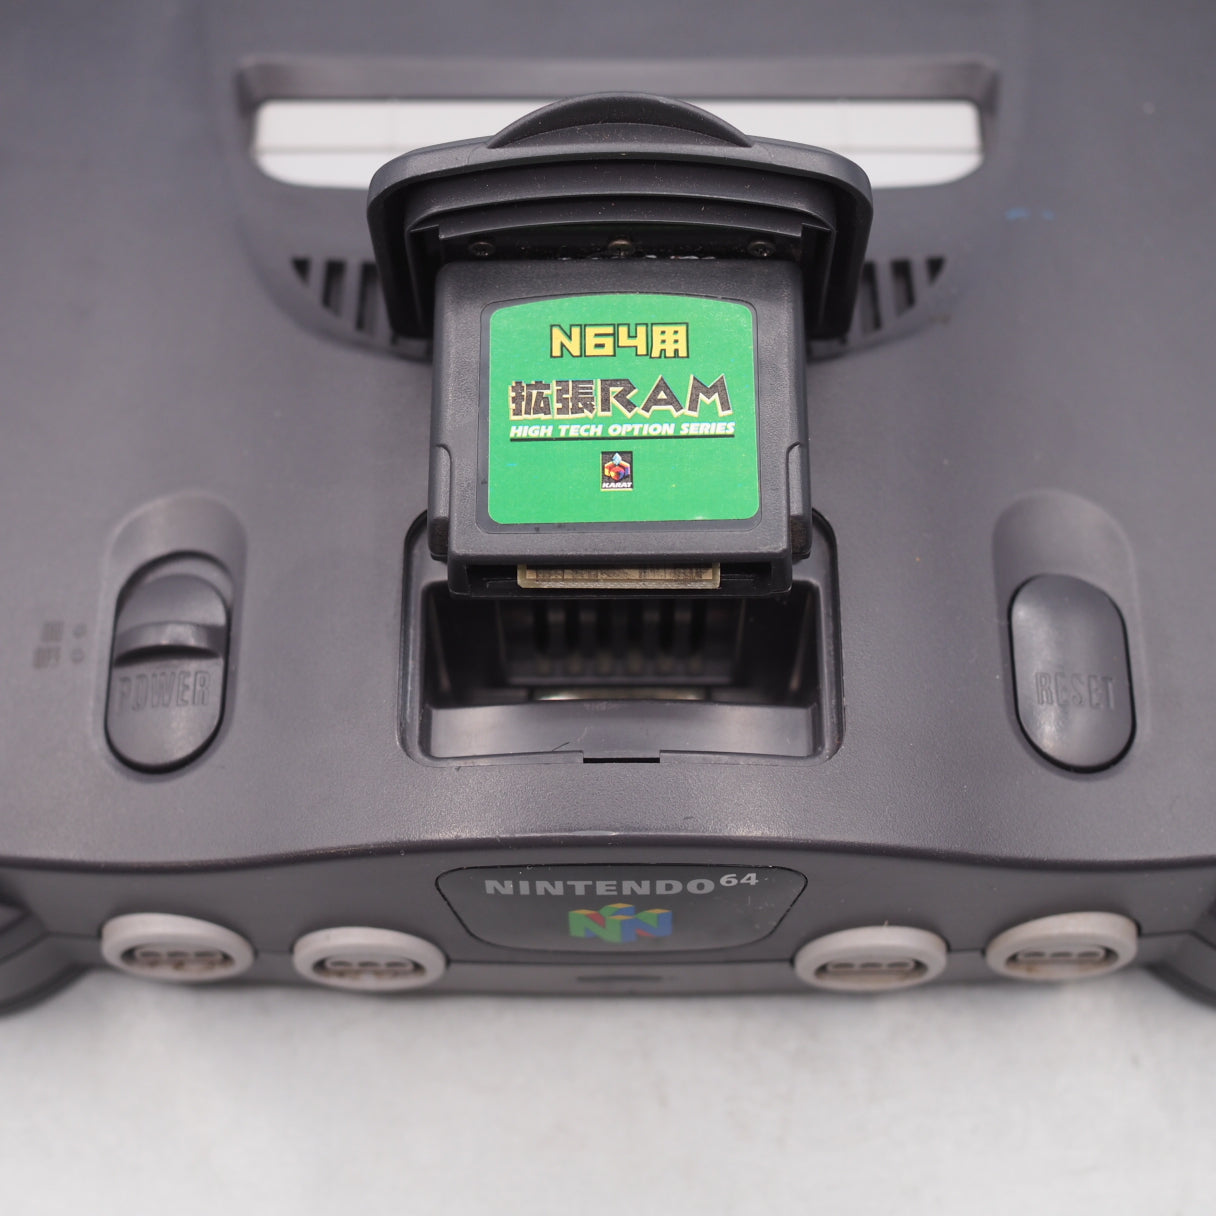 Nintendo 64 MEMORY EXPANSION PAK High Resolution RAM Pro Action Replay 3